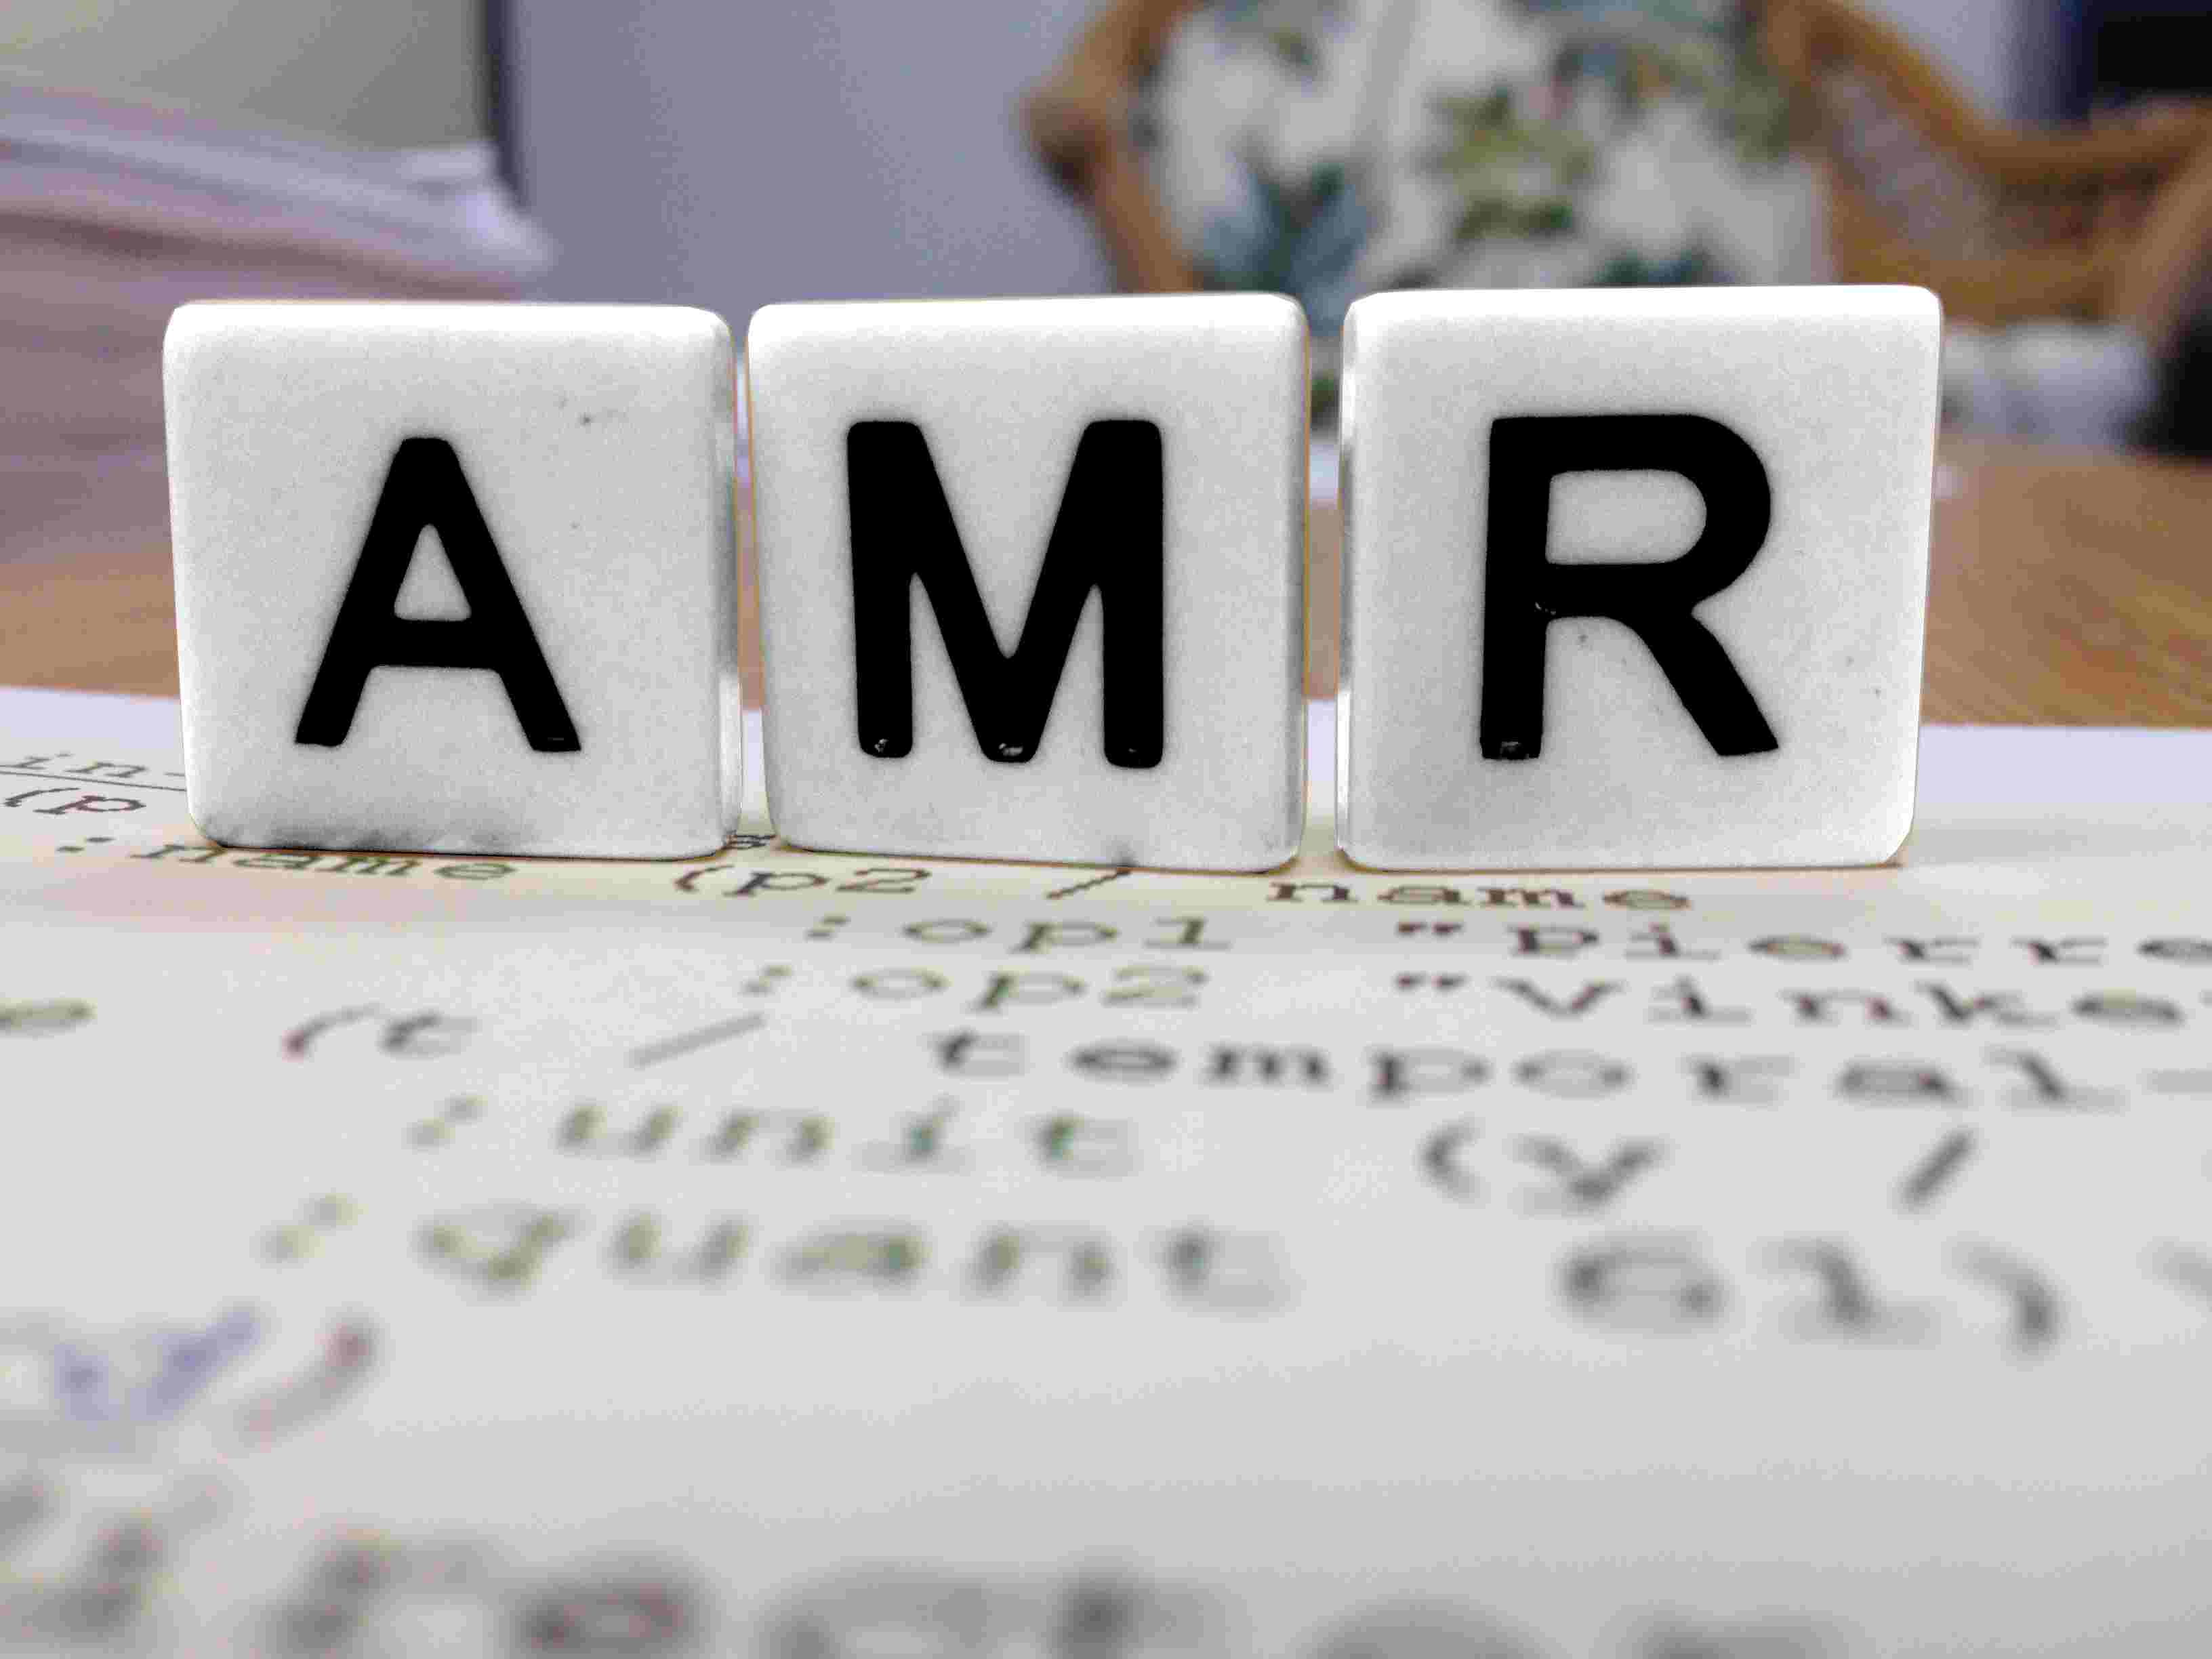 AMR in Scrabble tiles